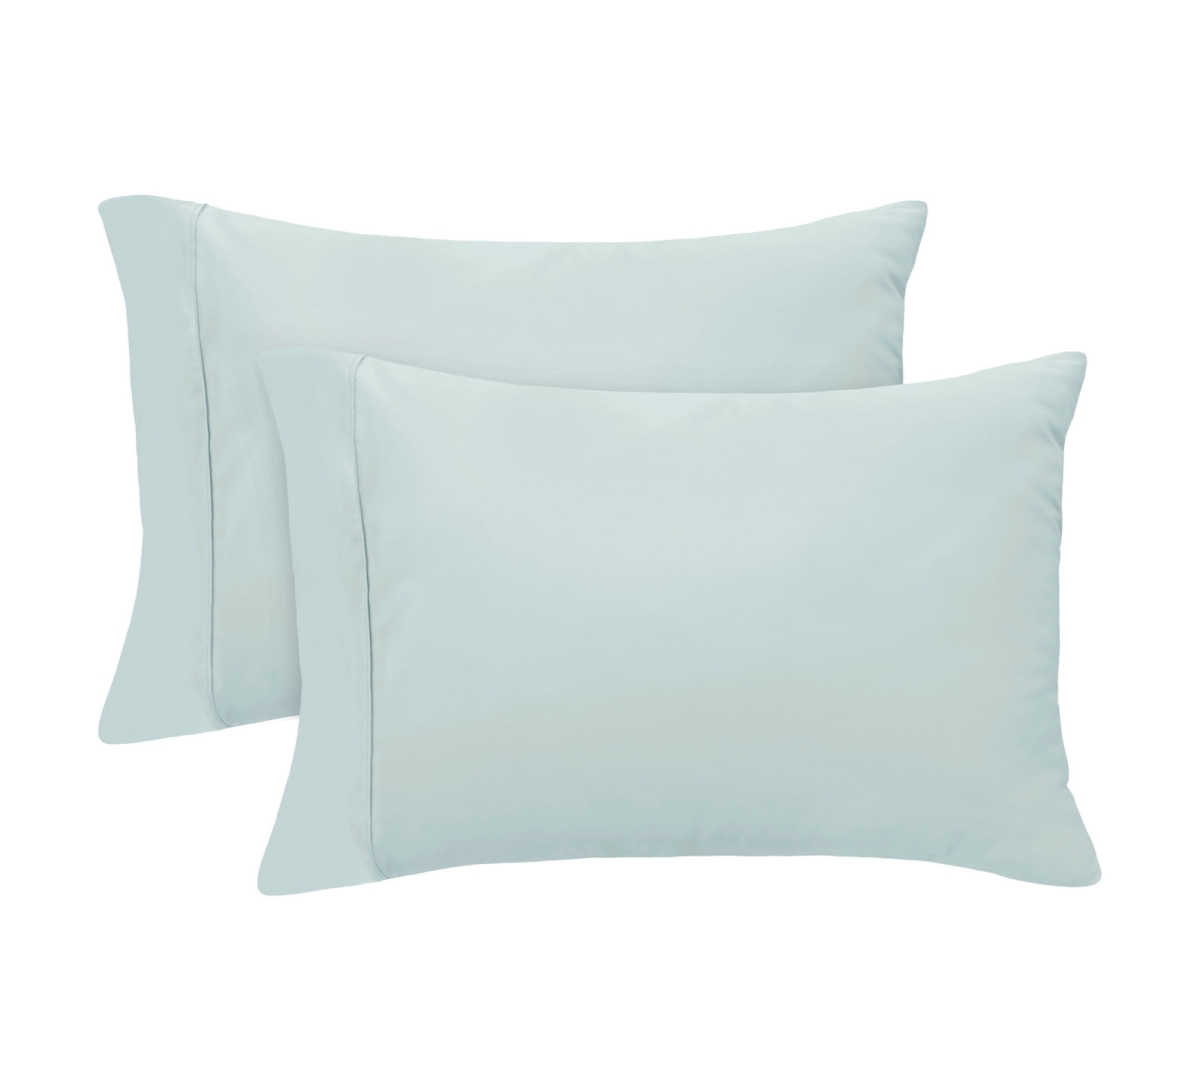 Yms008204 Luxury 620 Thread Count 100 Percent Cotton Pillowcase Set, Spa Blue - King - 2 Piece